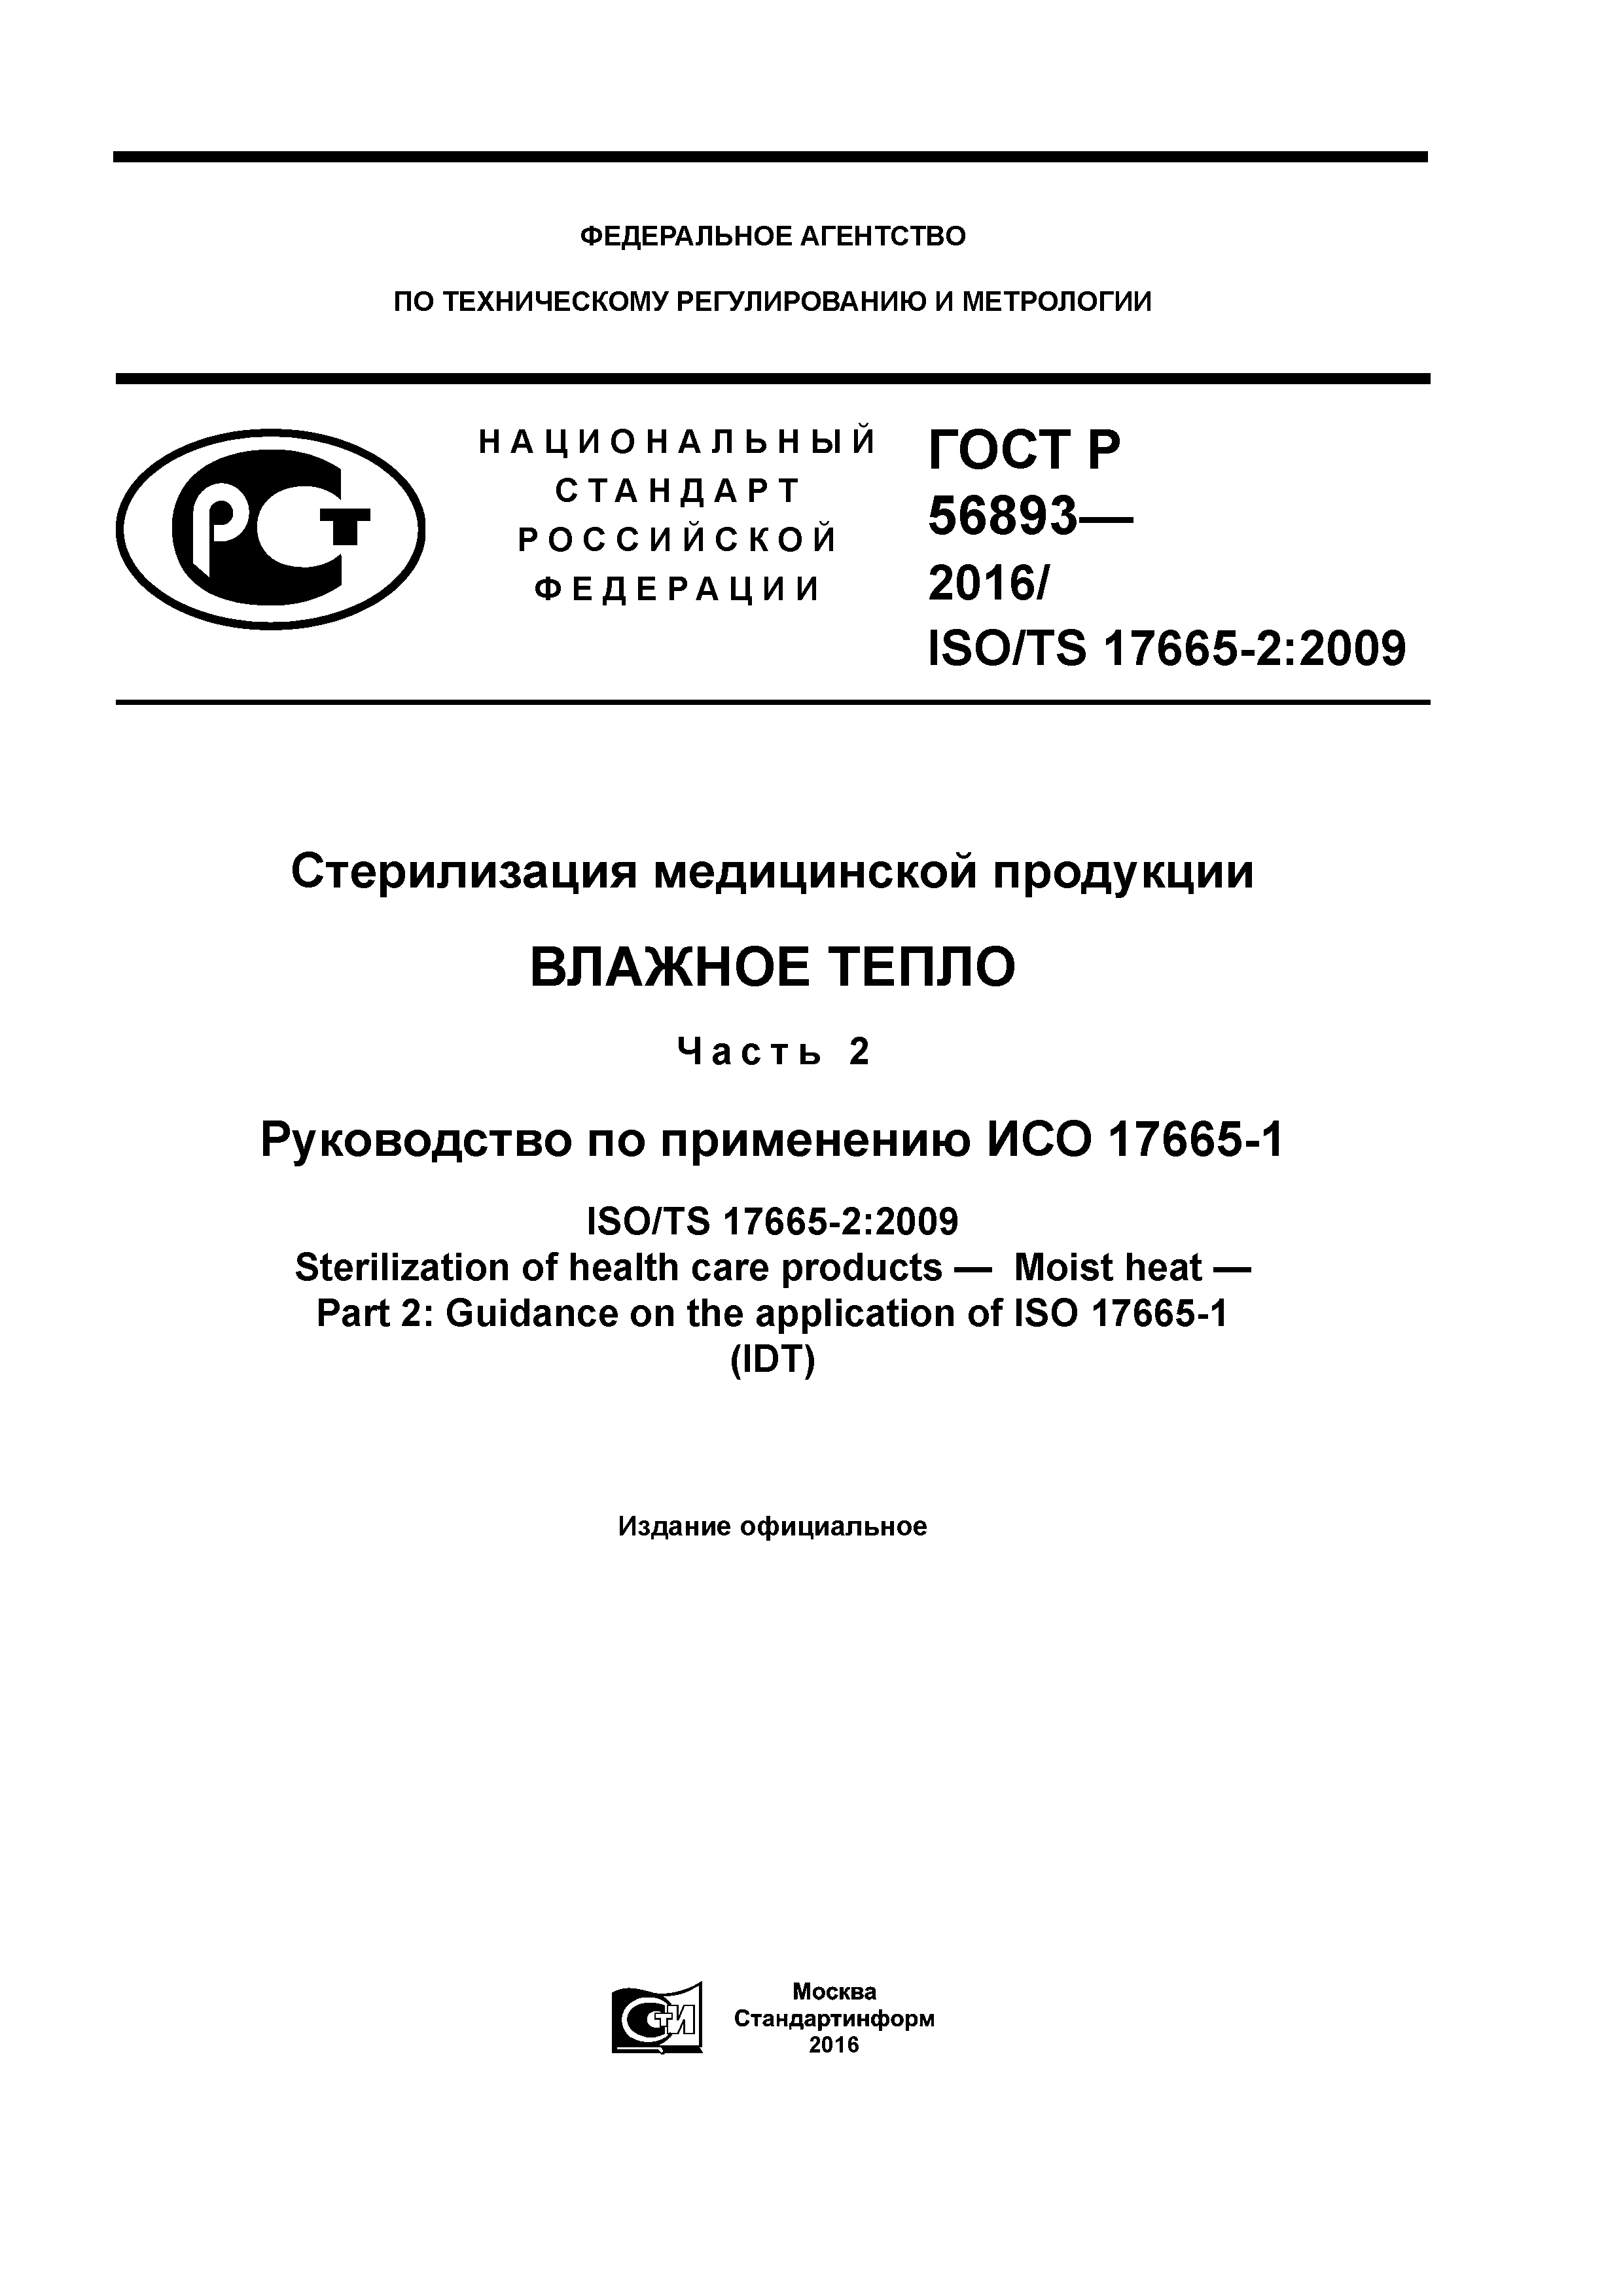 ГОСТ Р 56893-2016